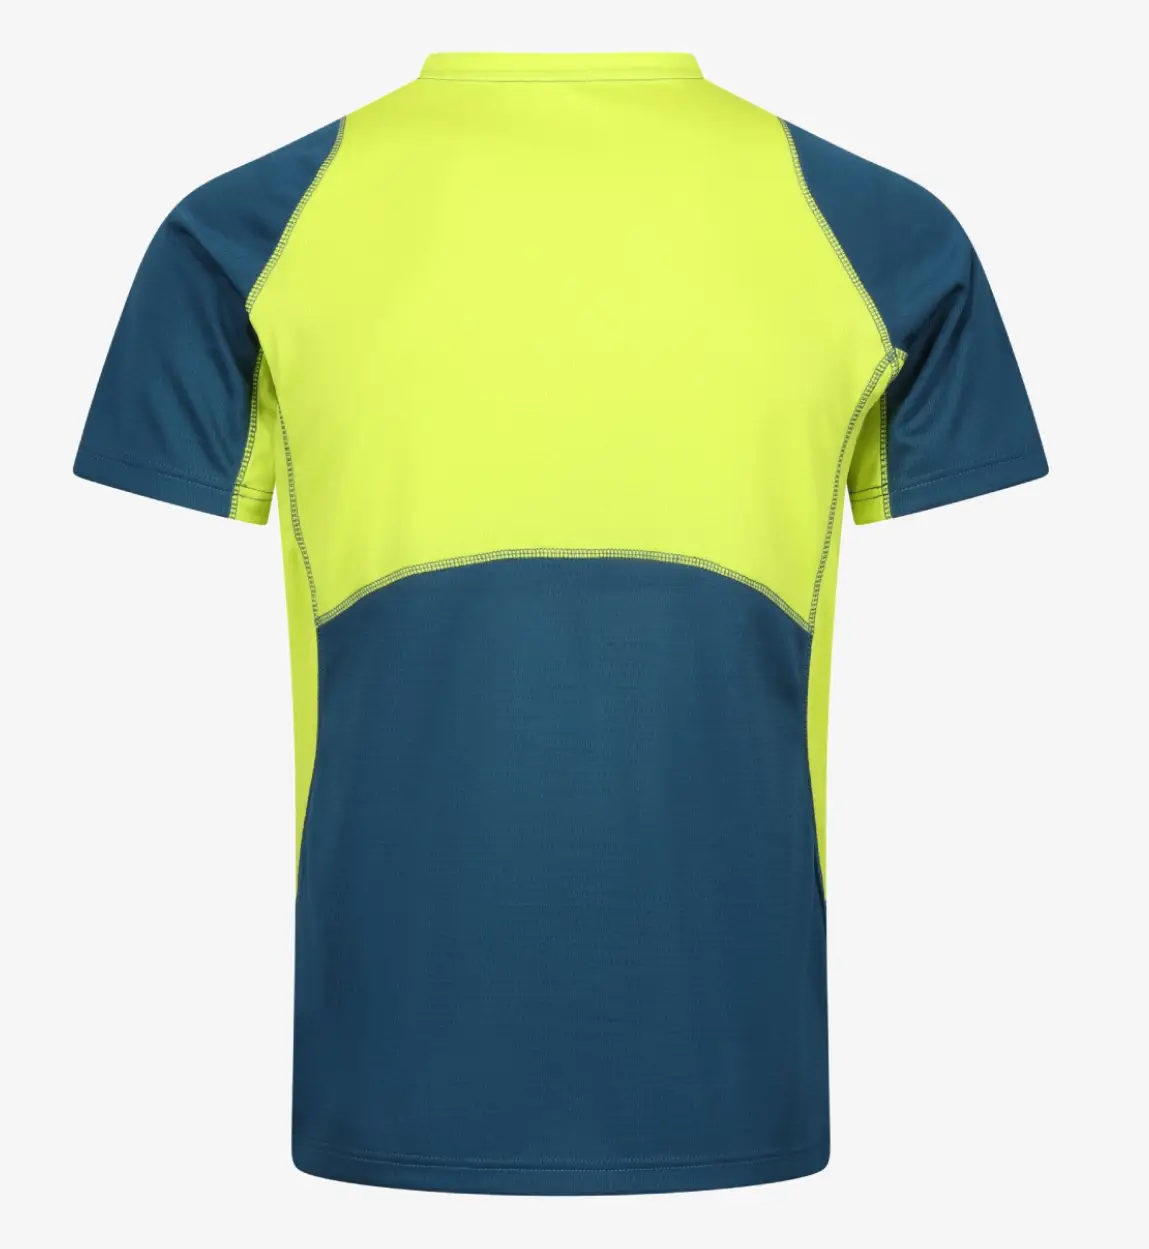 Tendon Sports T-Shirt (1)